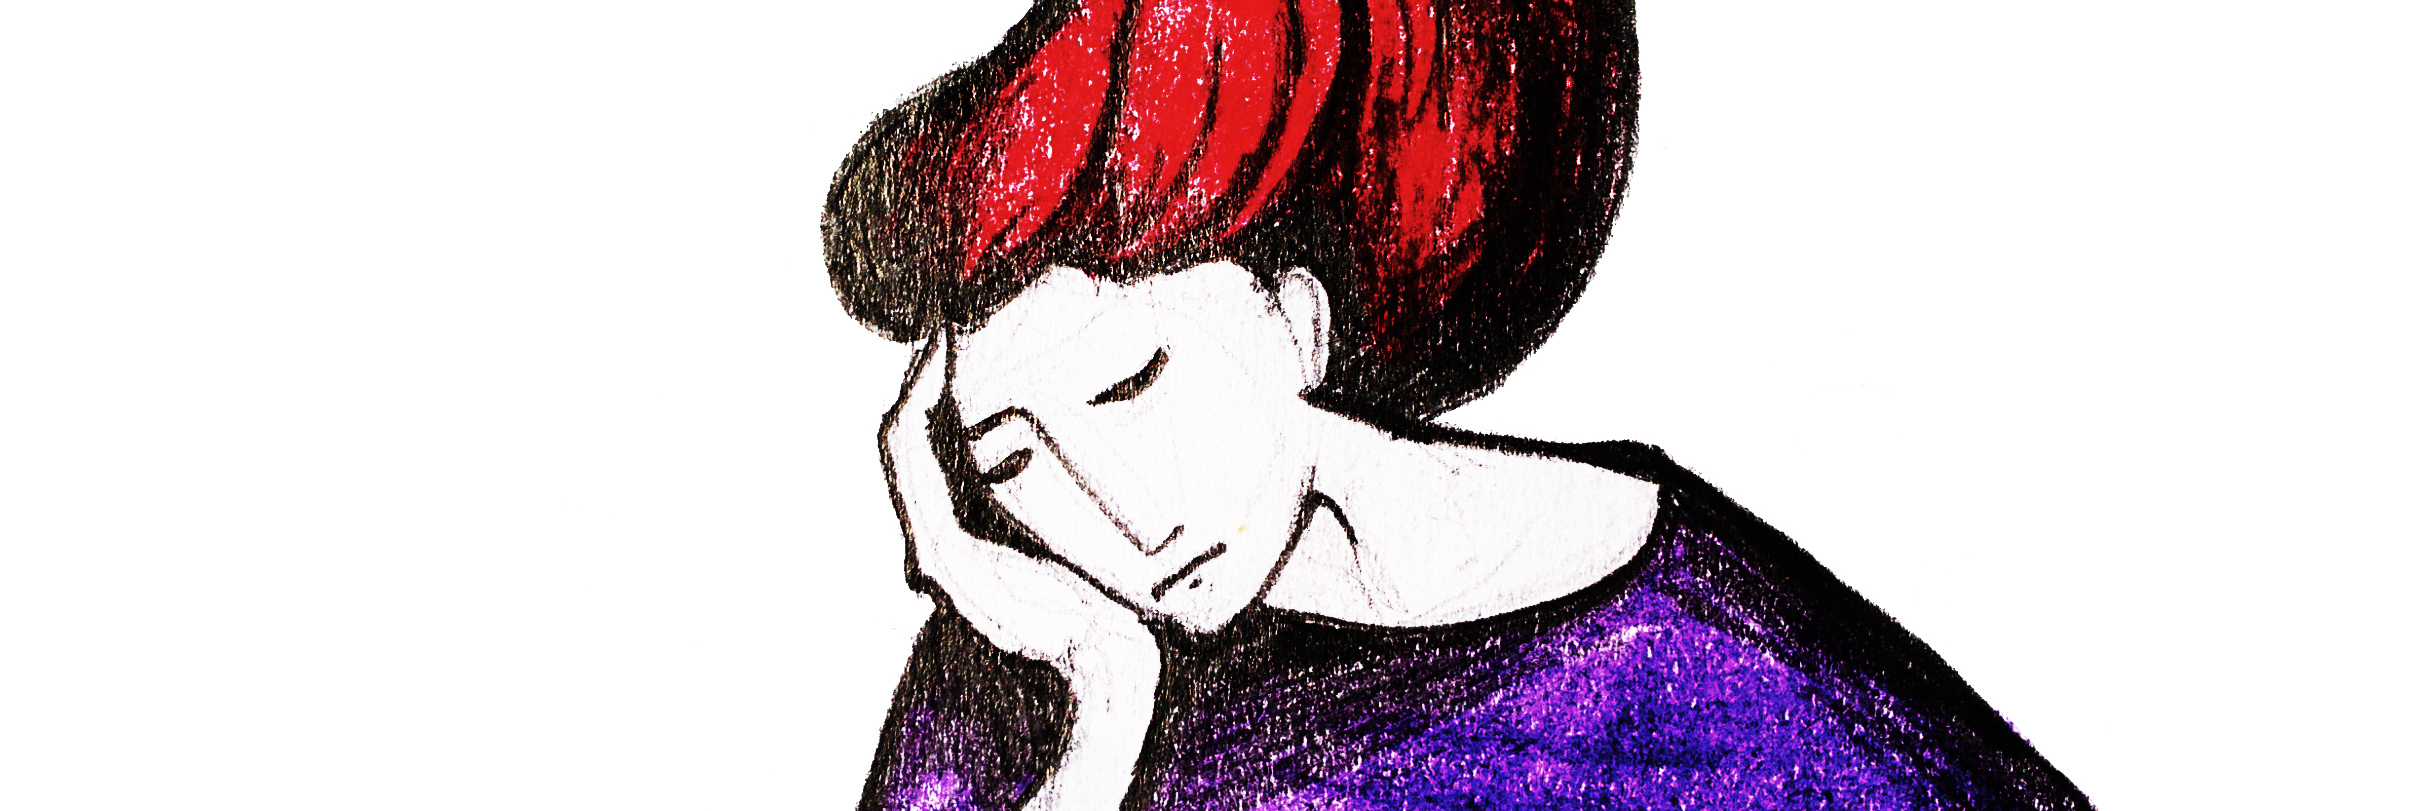 Dreaming redhead girl, hand drawing watercolor illustration,